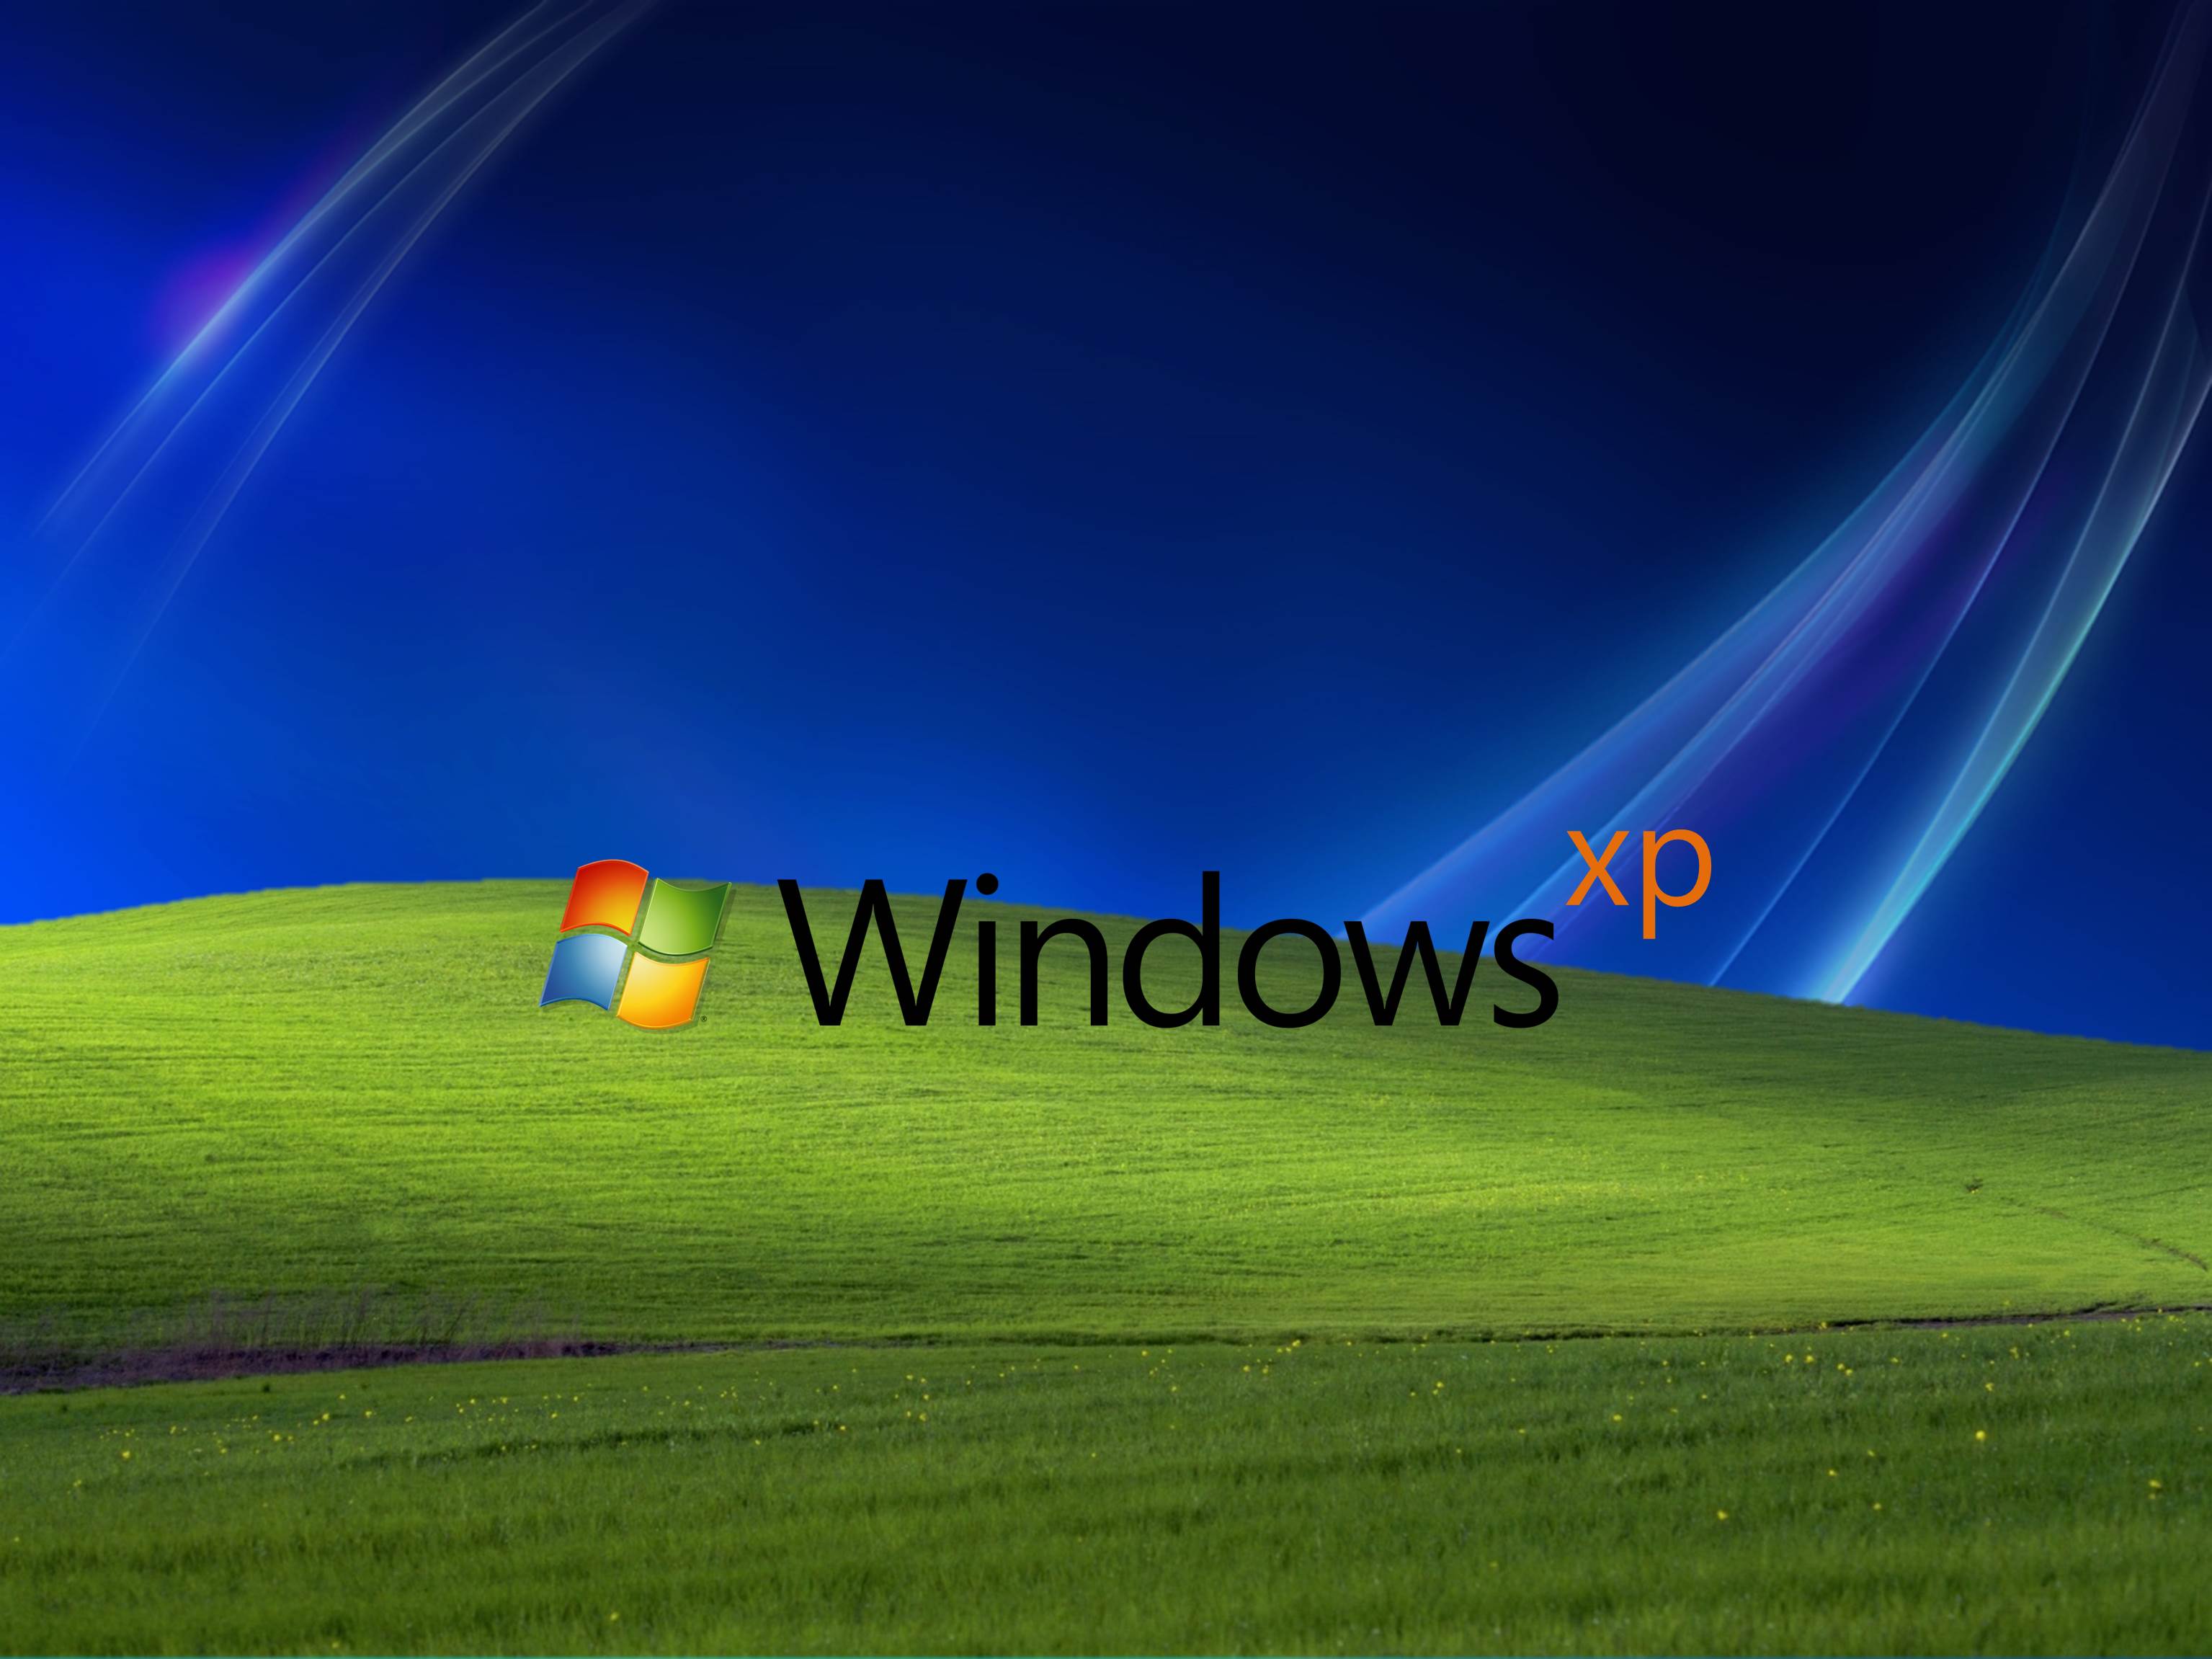 HD Windows Xp Hs Wallpaper